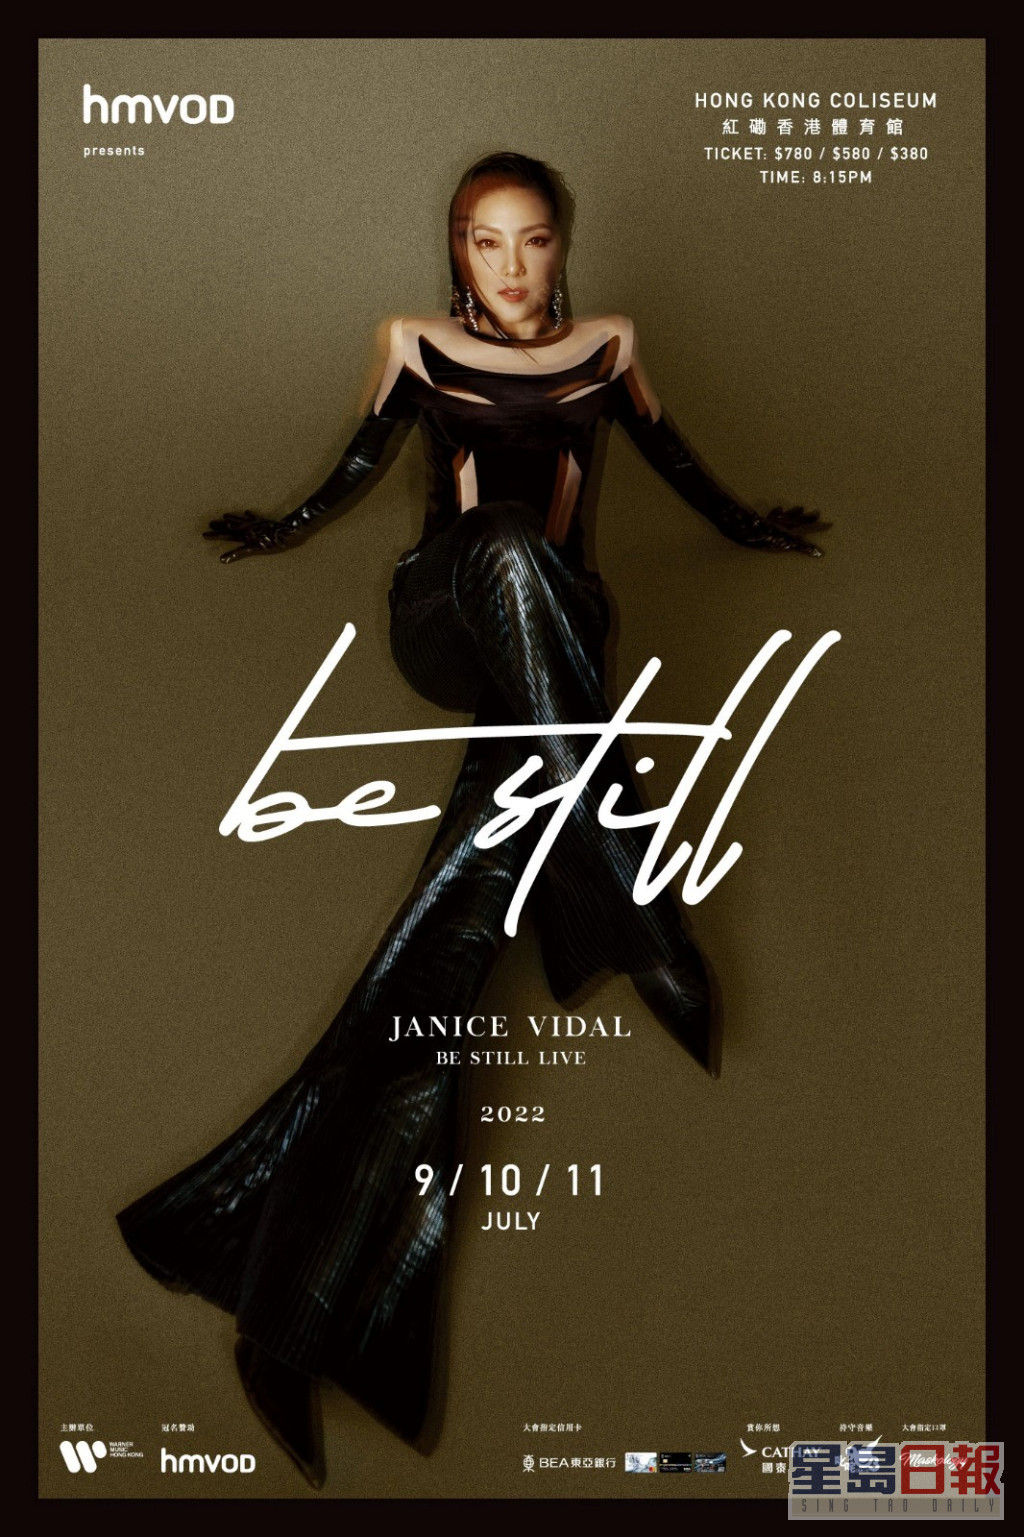 《Janice Be Still Live 2022》将于7月9-11日举行。